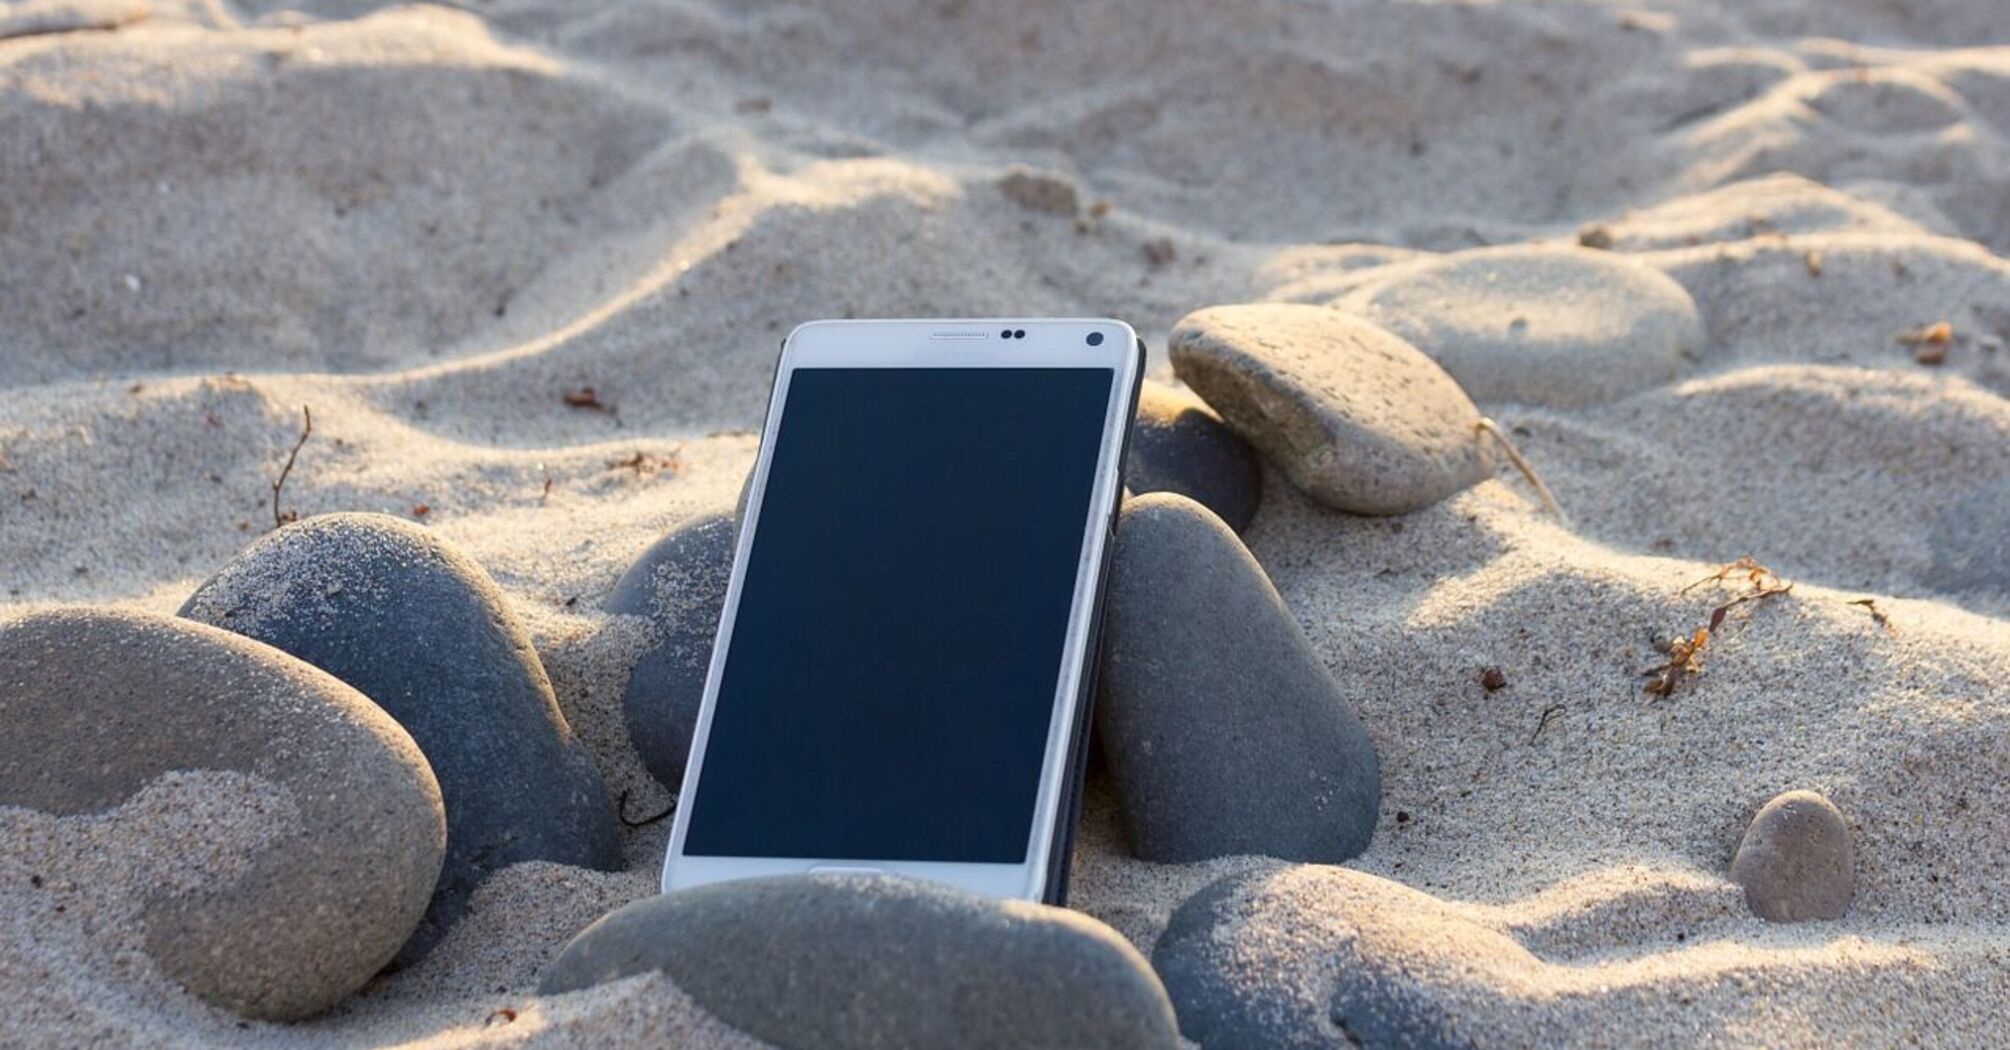 Phone overheats on the beach